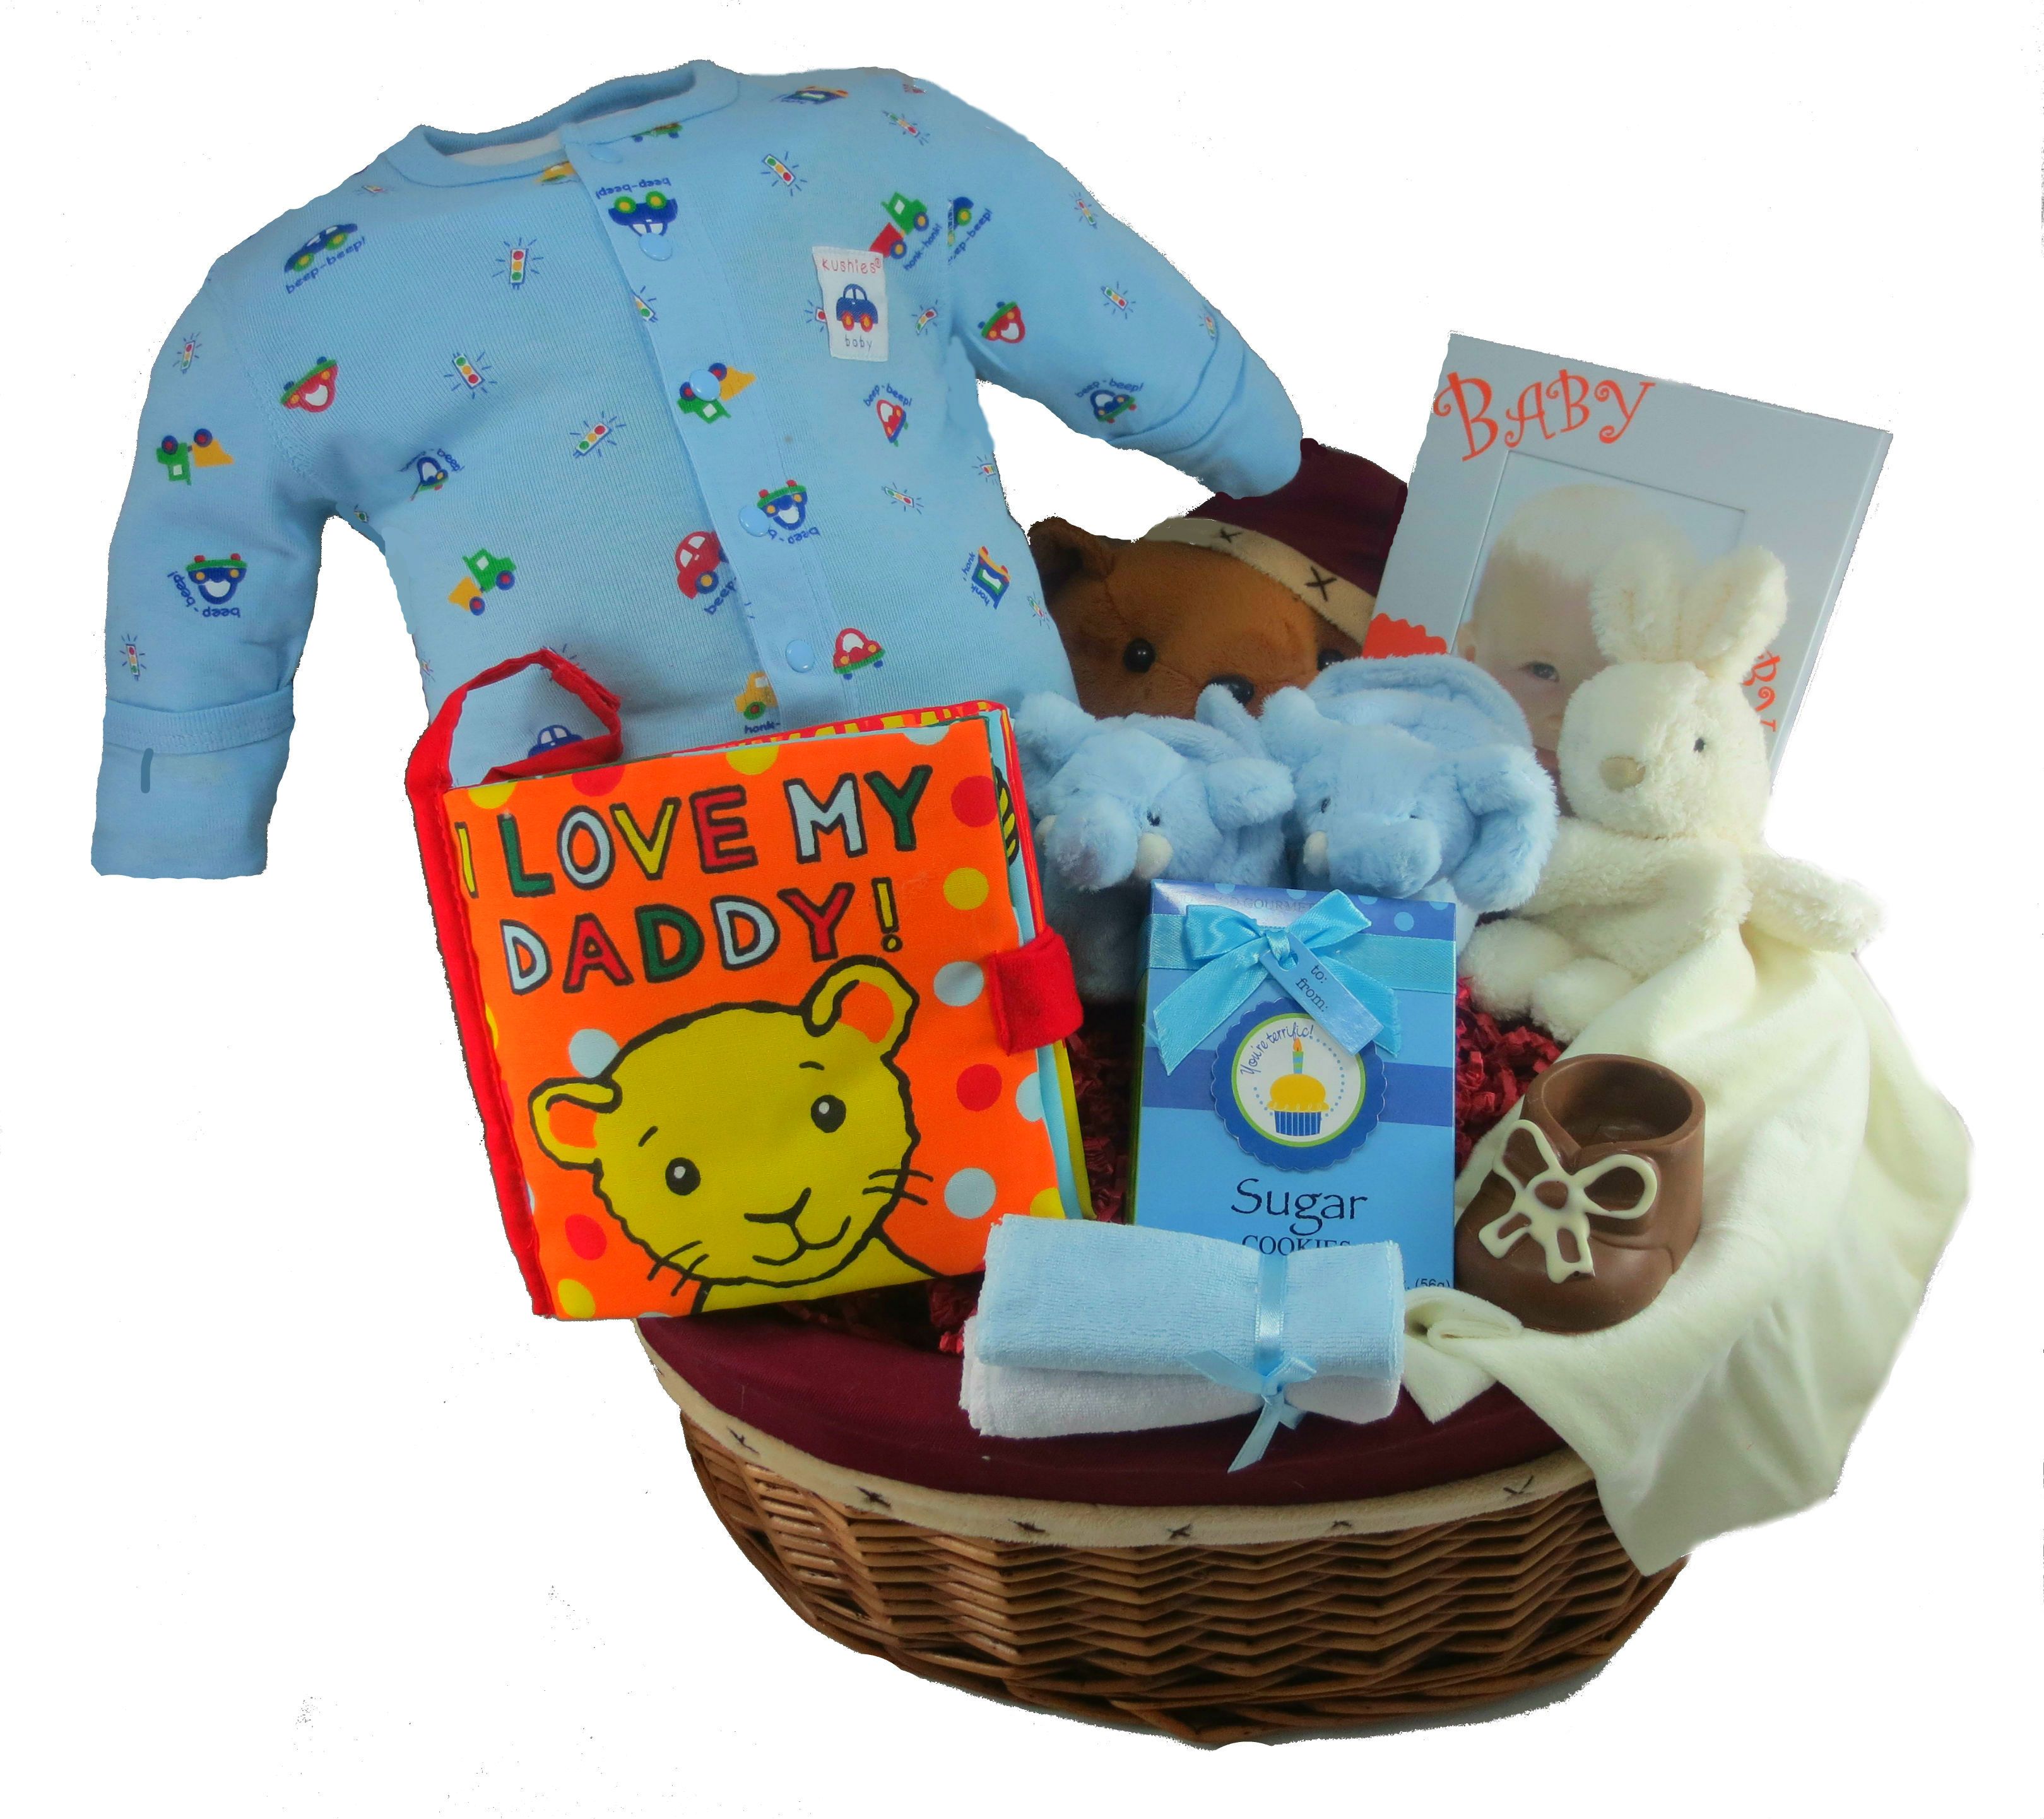 The Bear Baby Gift Basket